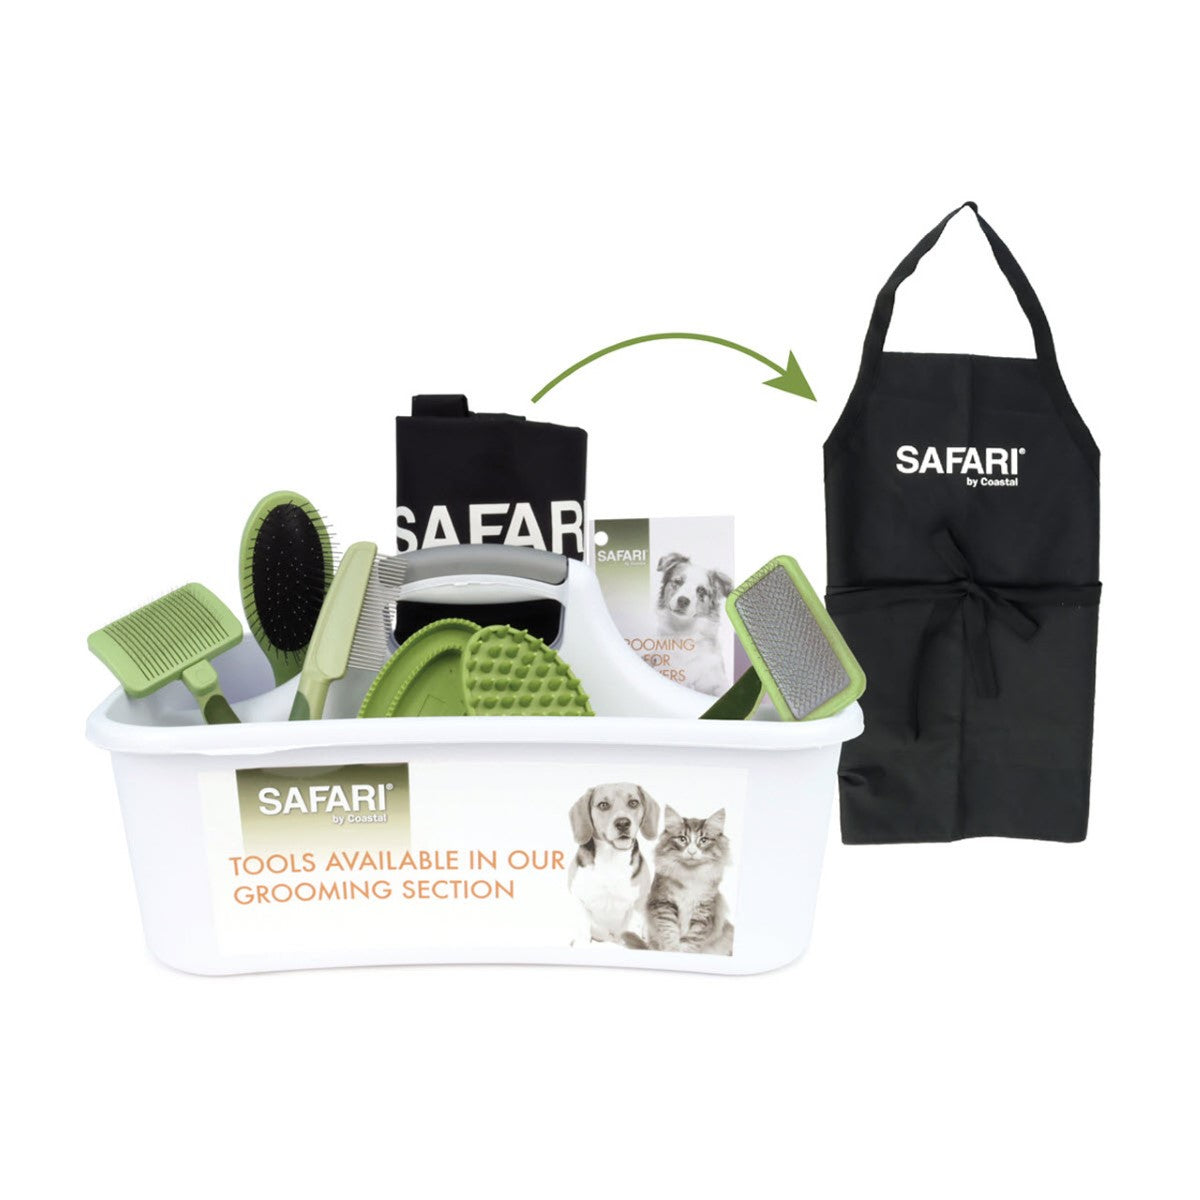 The Safari Wash Station Kit By Coastal Pet Products